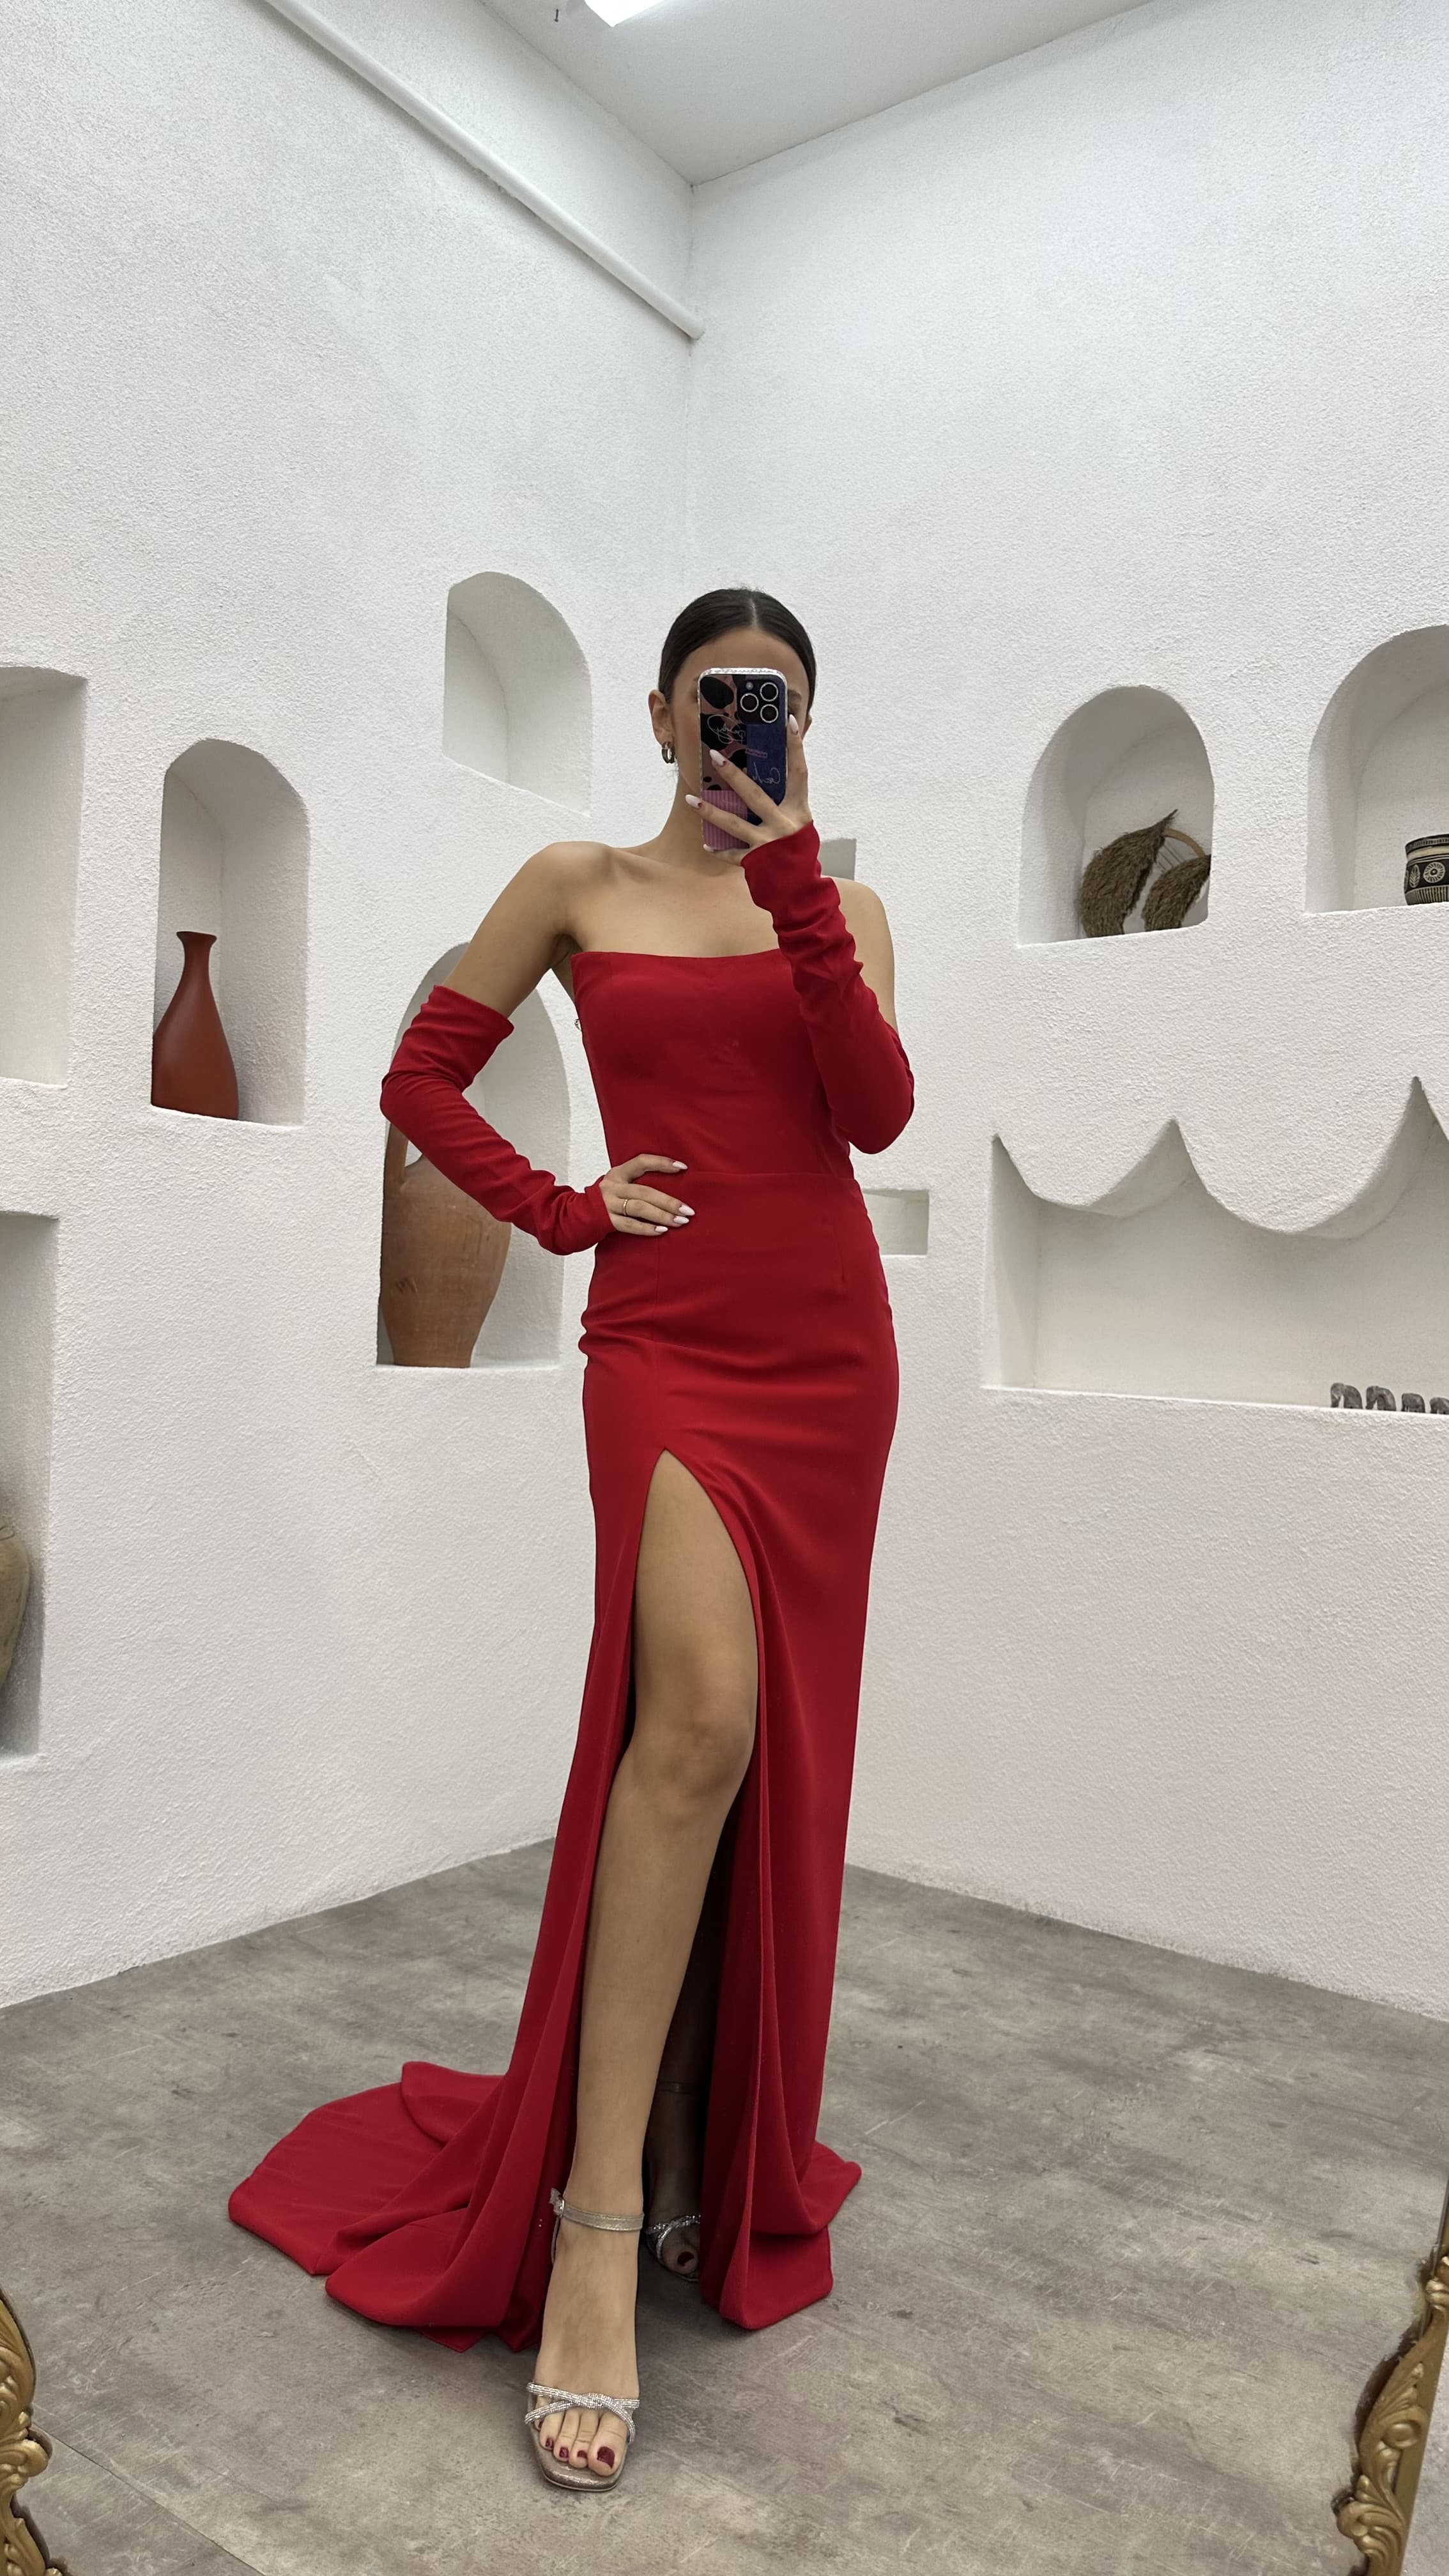 Red Sleeve Detail Strapless Evening Dress